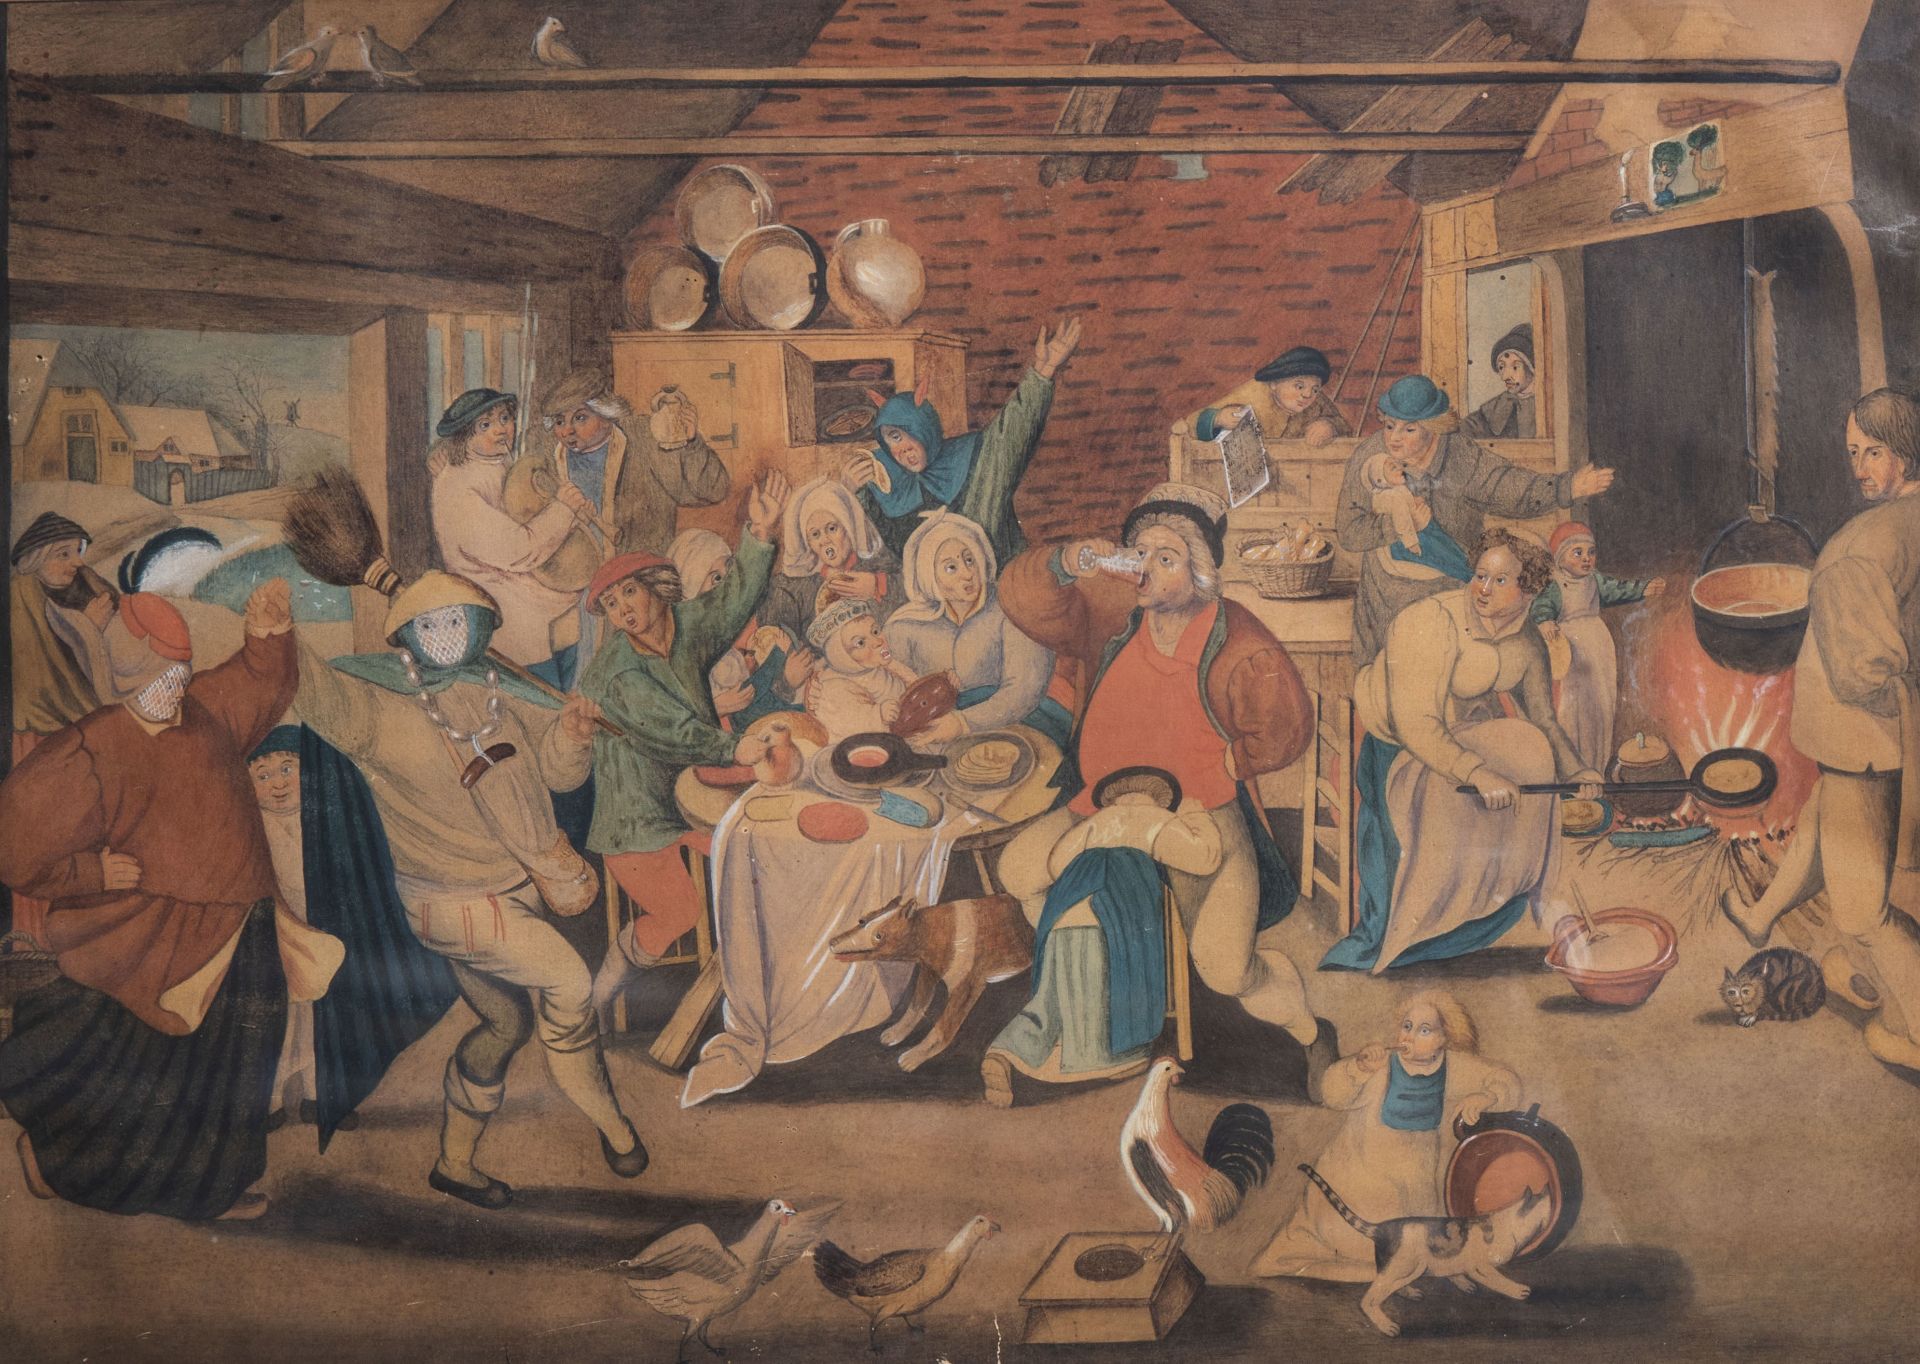 Flemish school, after Pieter Brueghel II (1564-1638): Peasants making merry in an interior, watercol